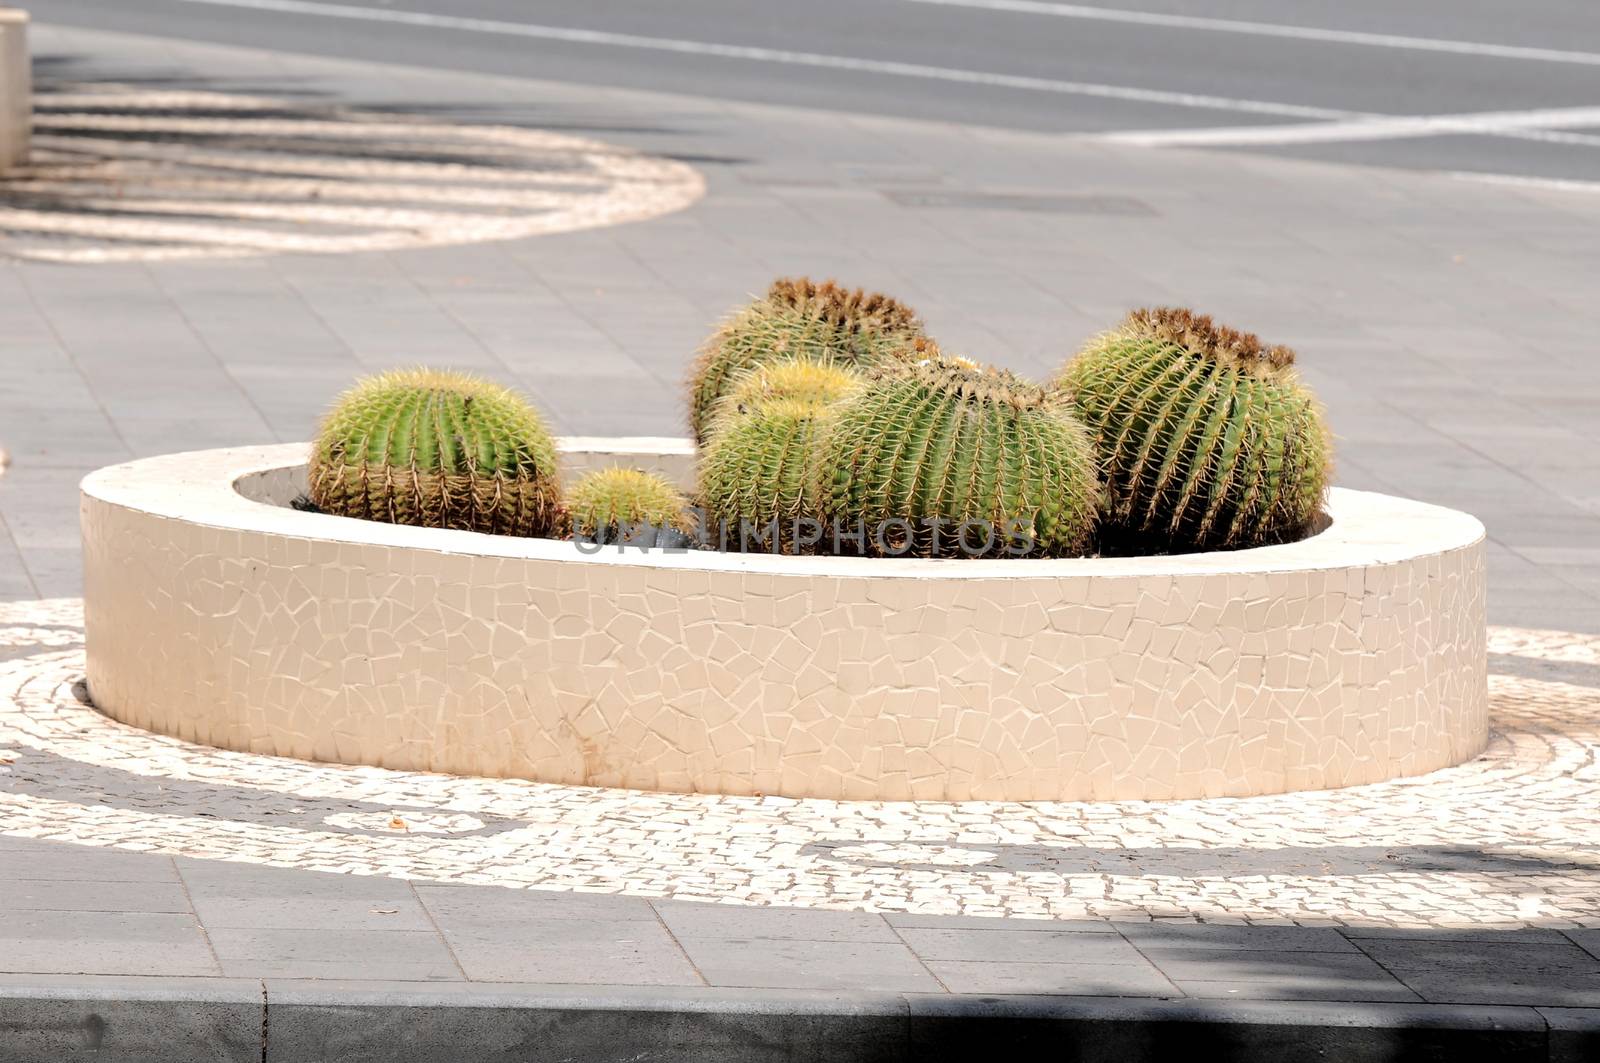 Some Round Succulent Plants on a Corner's Street